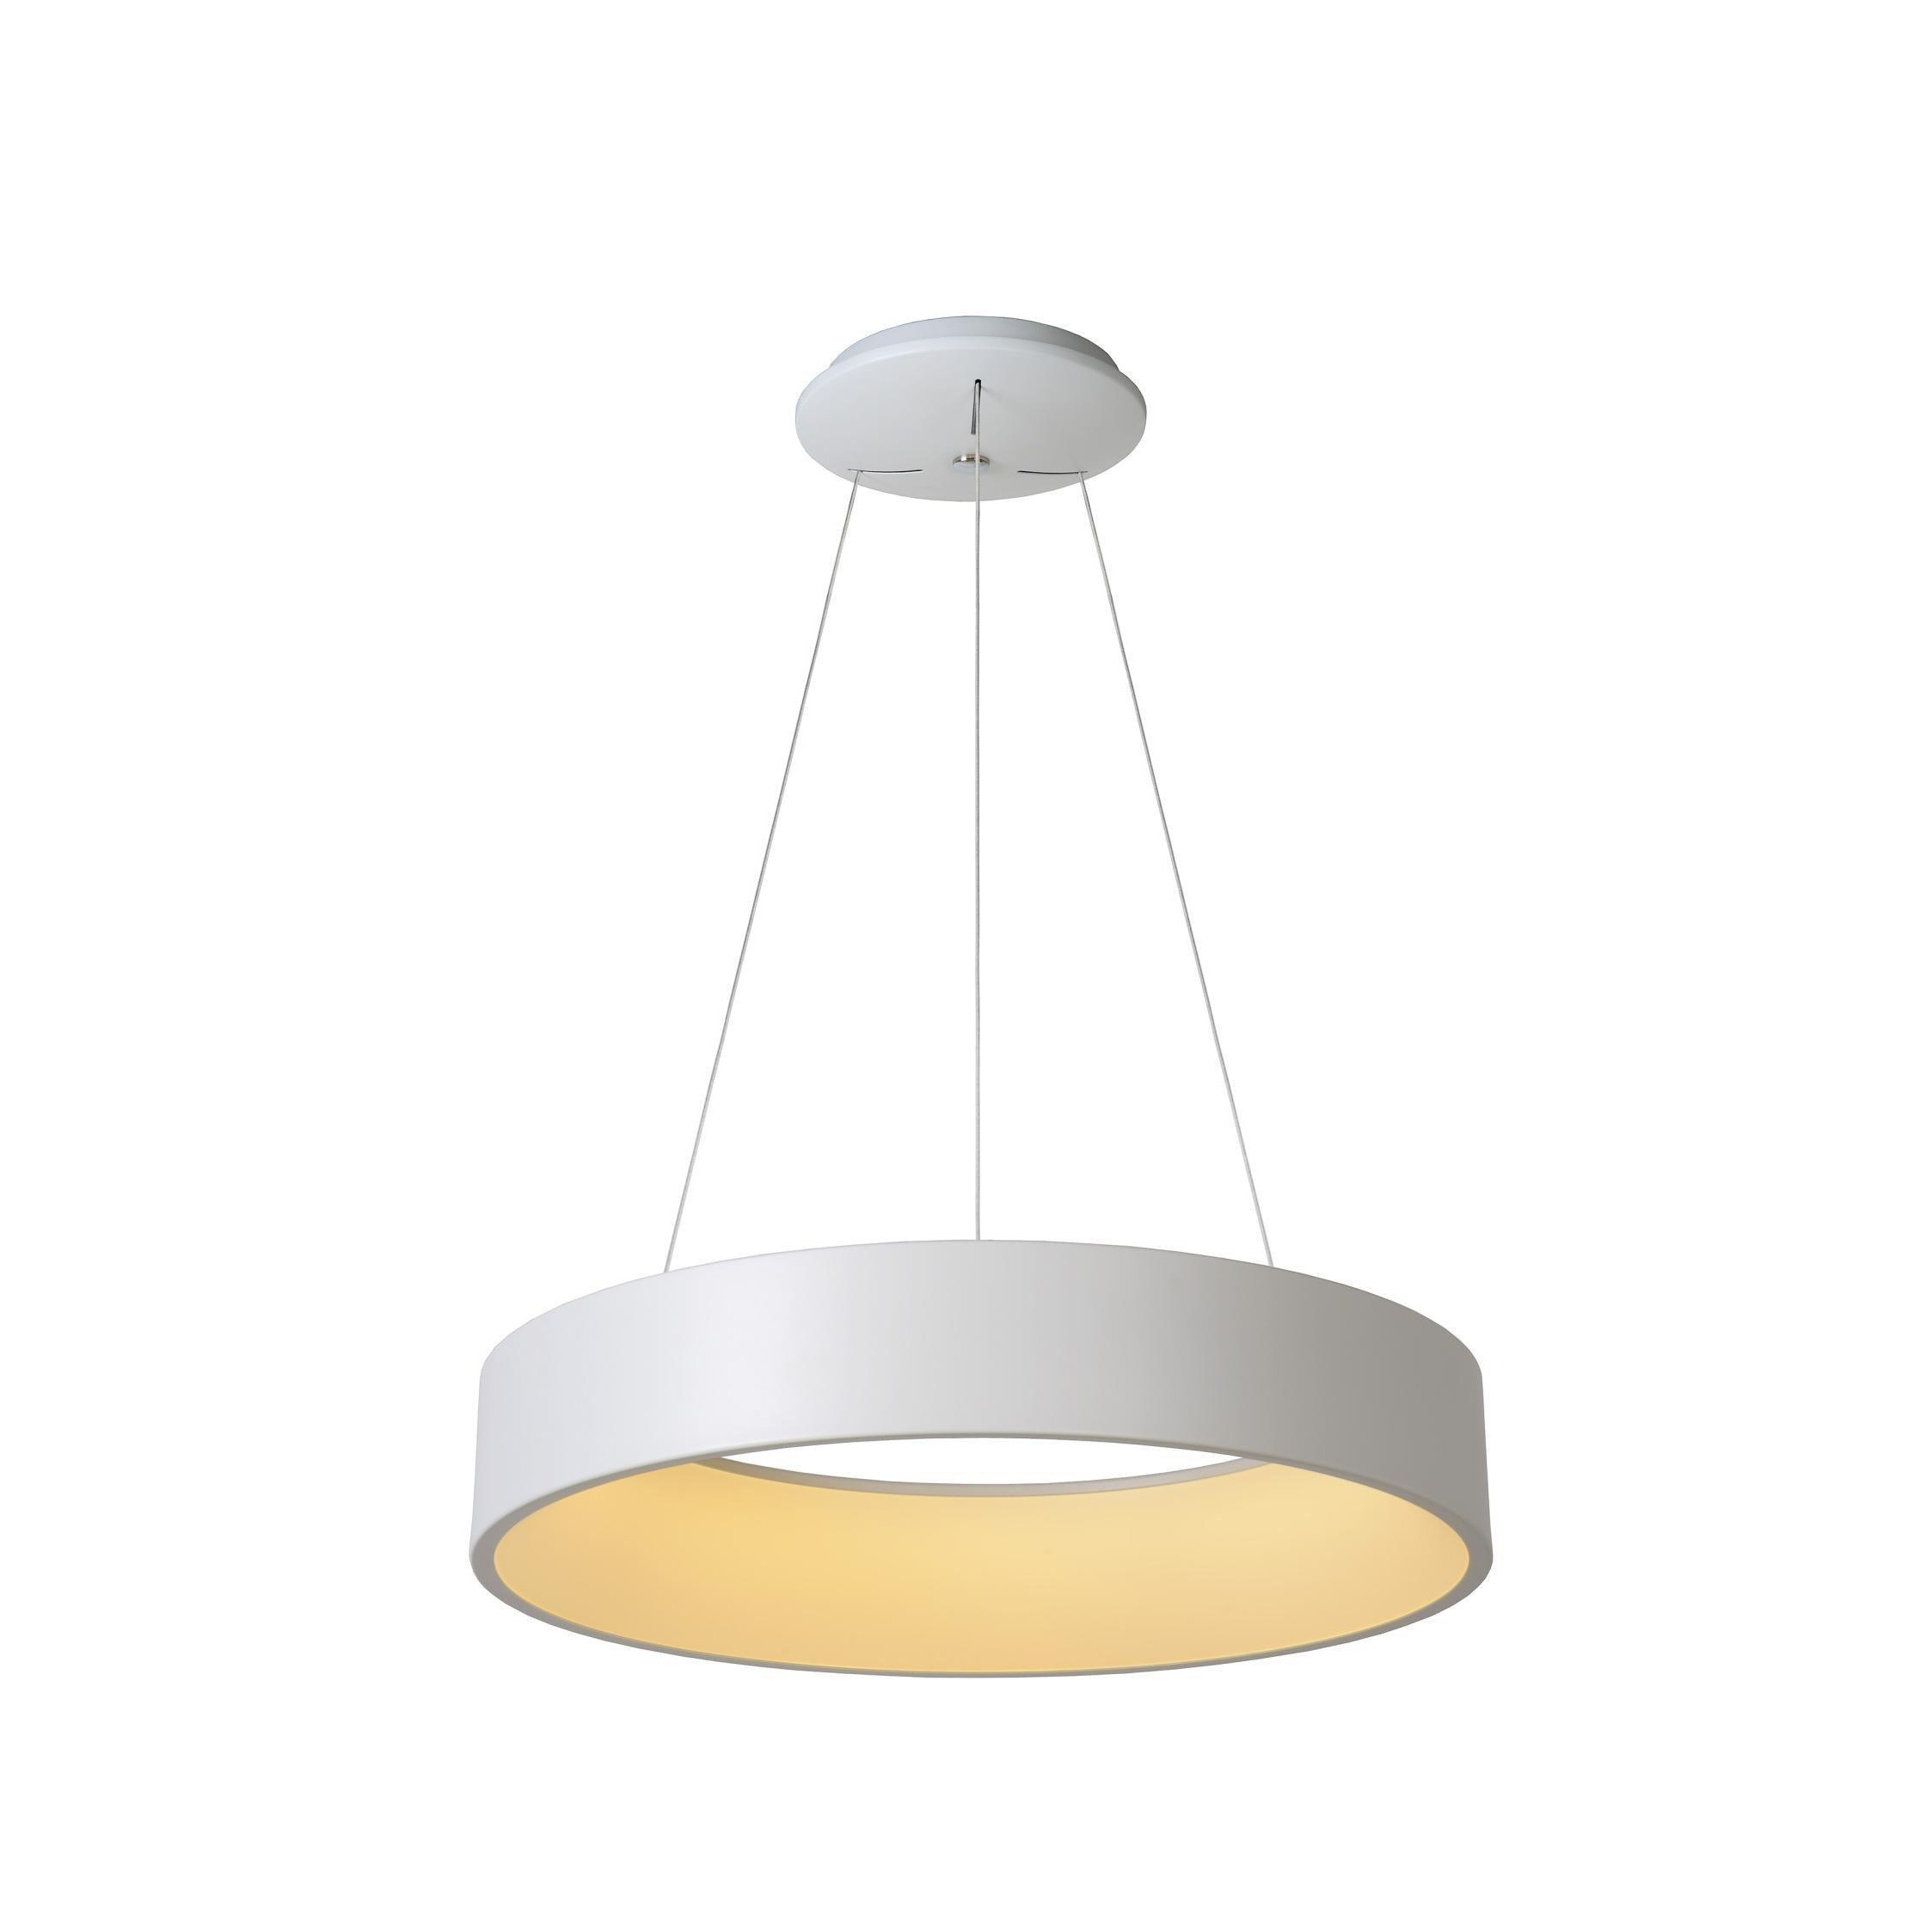 'TALOWE' Dimmable Stylish Adjustable Indoor LED Ceiling Pendant Light - image 1